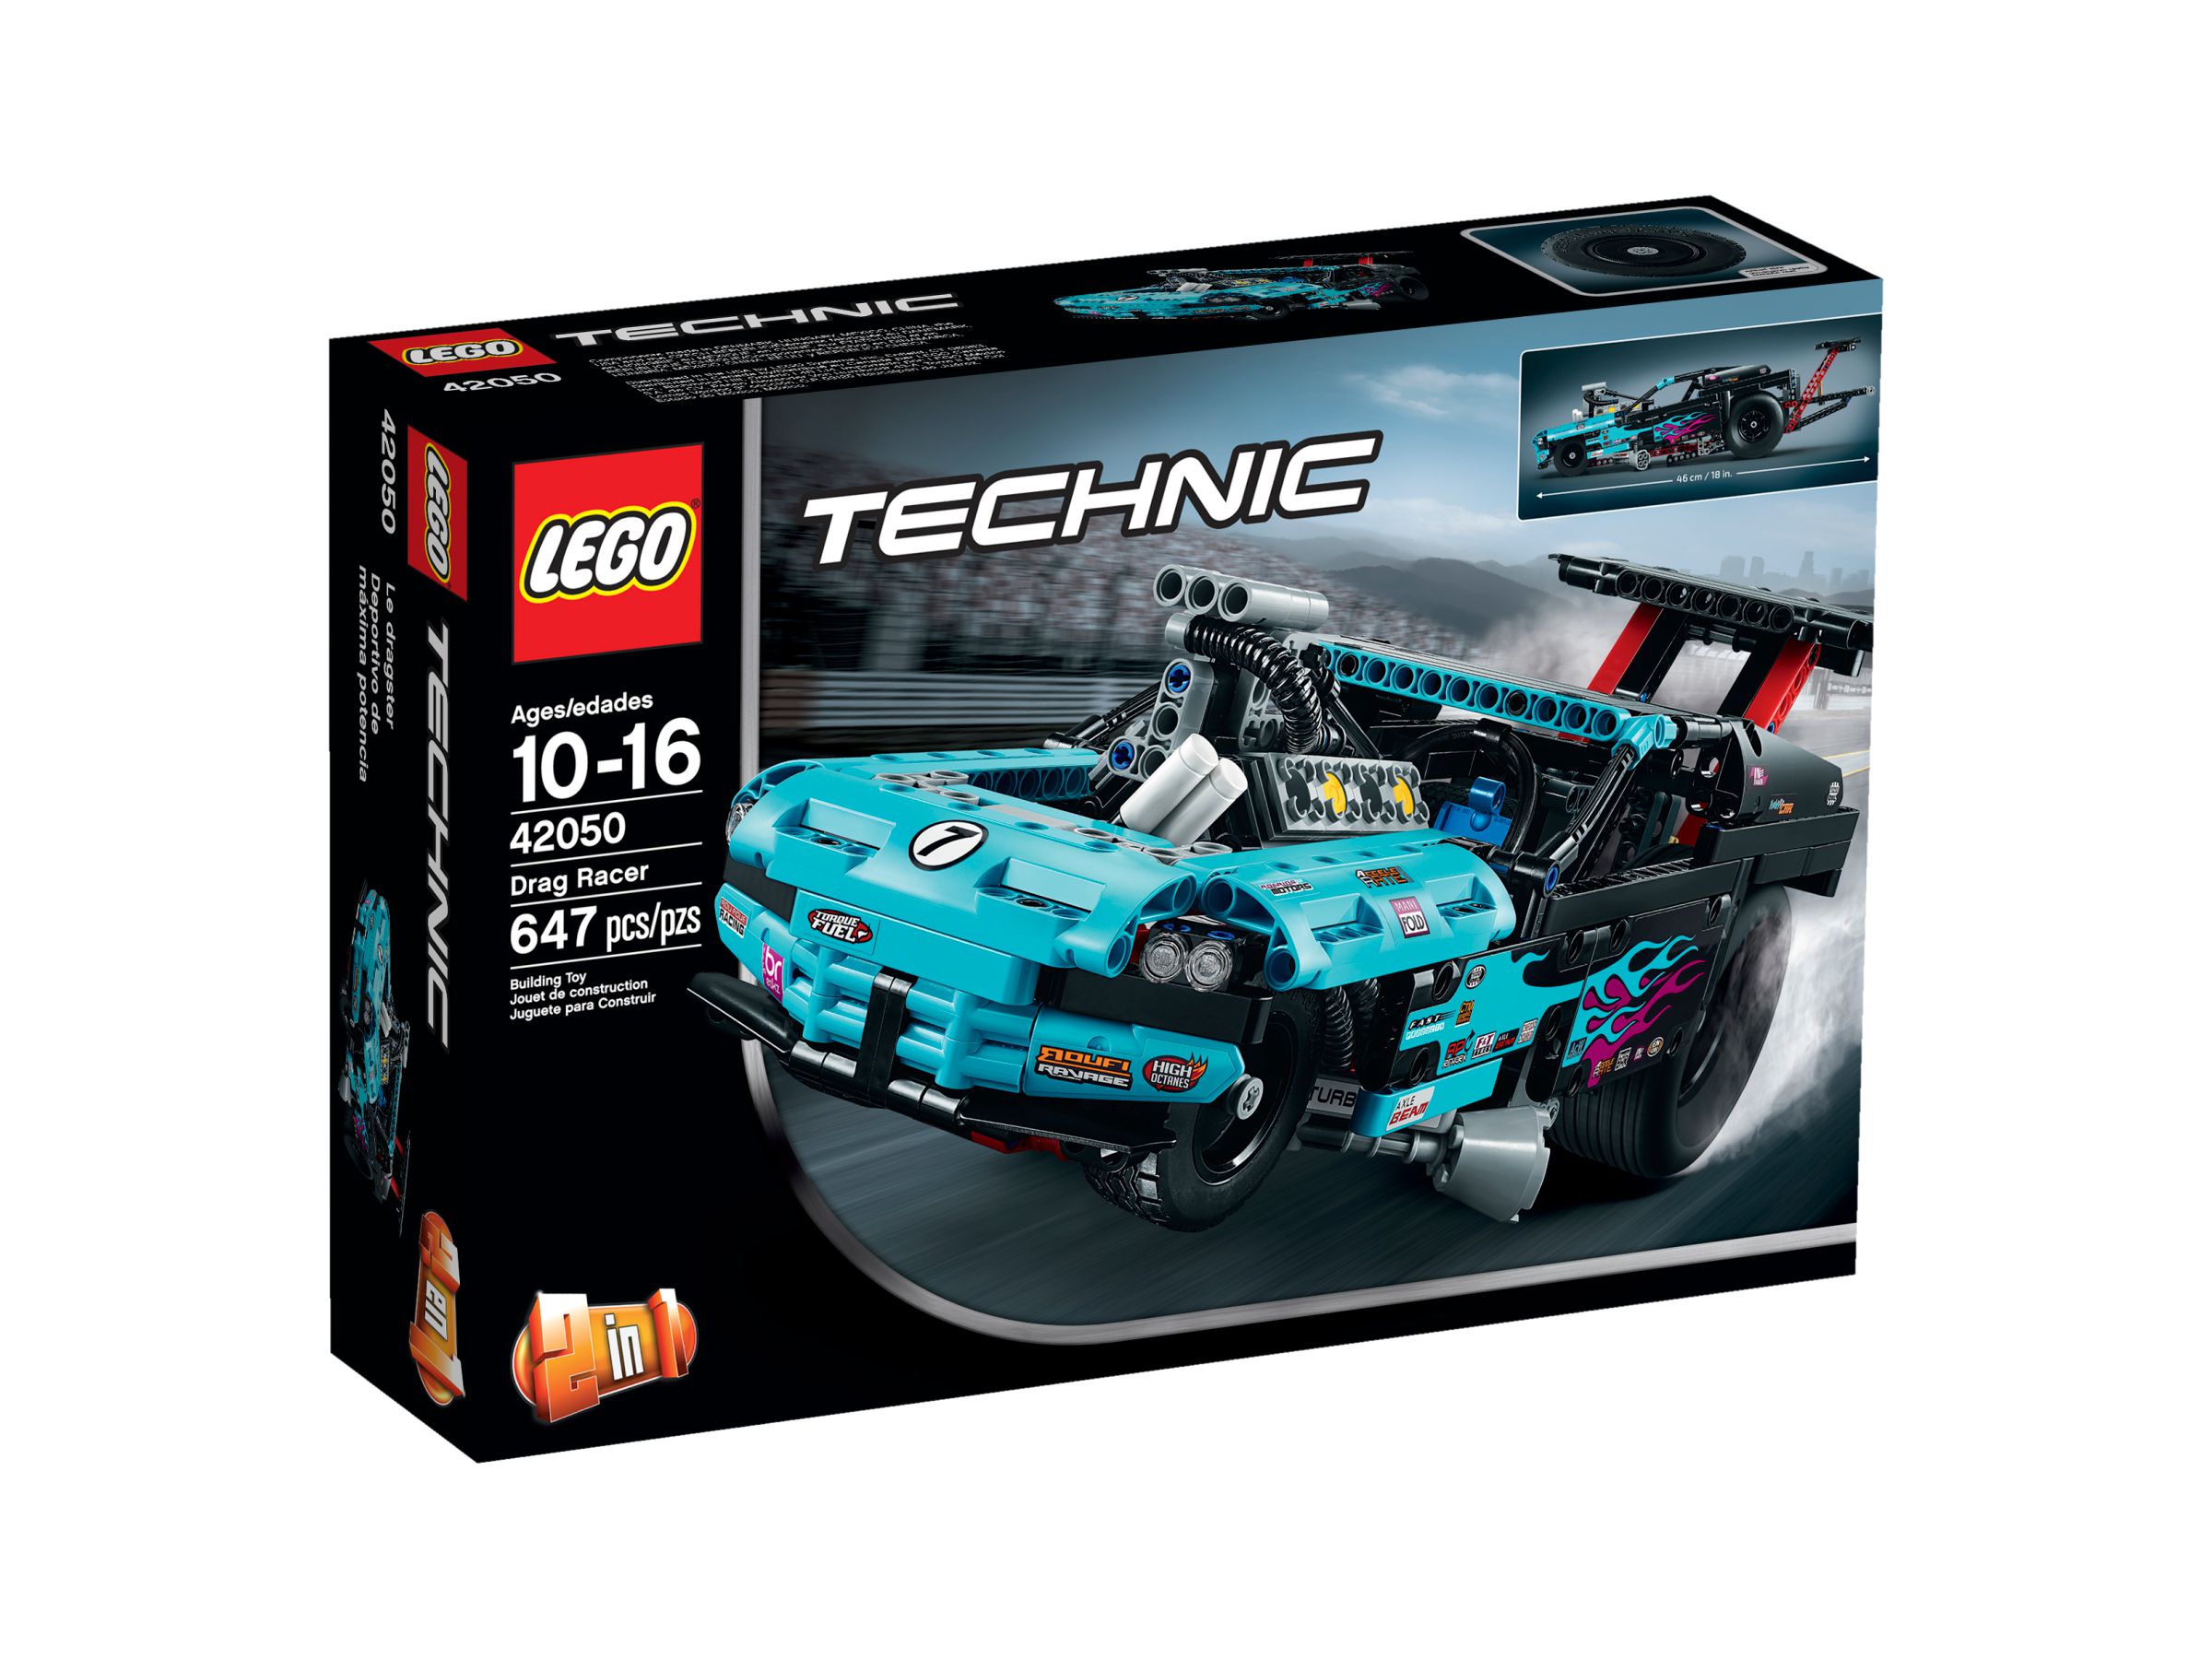 LEGO Technic 42050 Drag Racer LEGO_42050_alt1.jpg